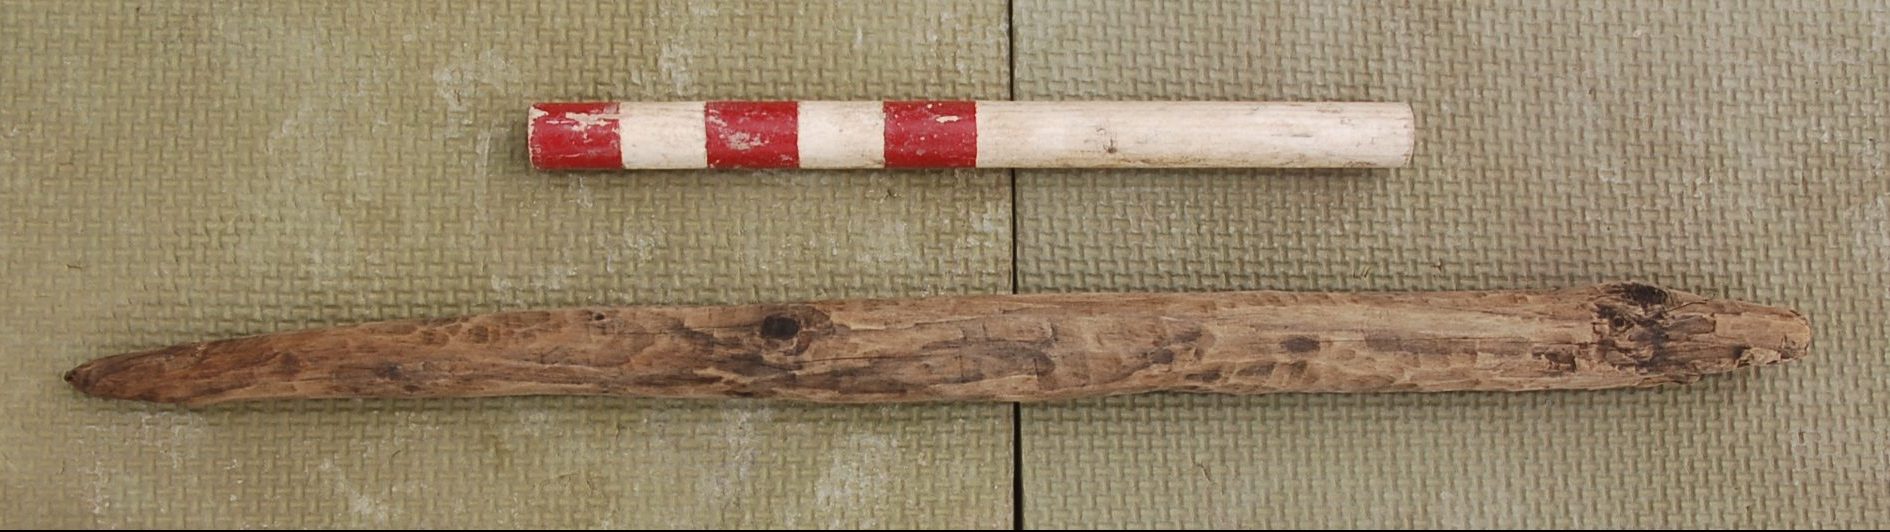 Wooden spear